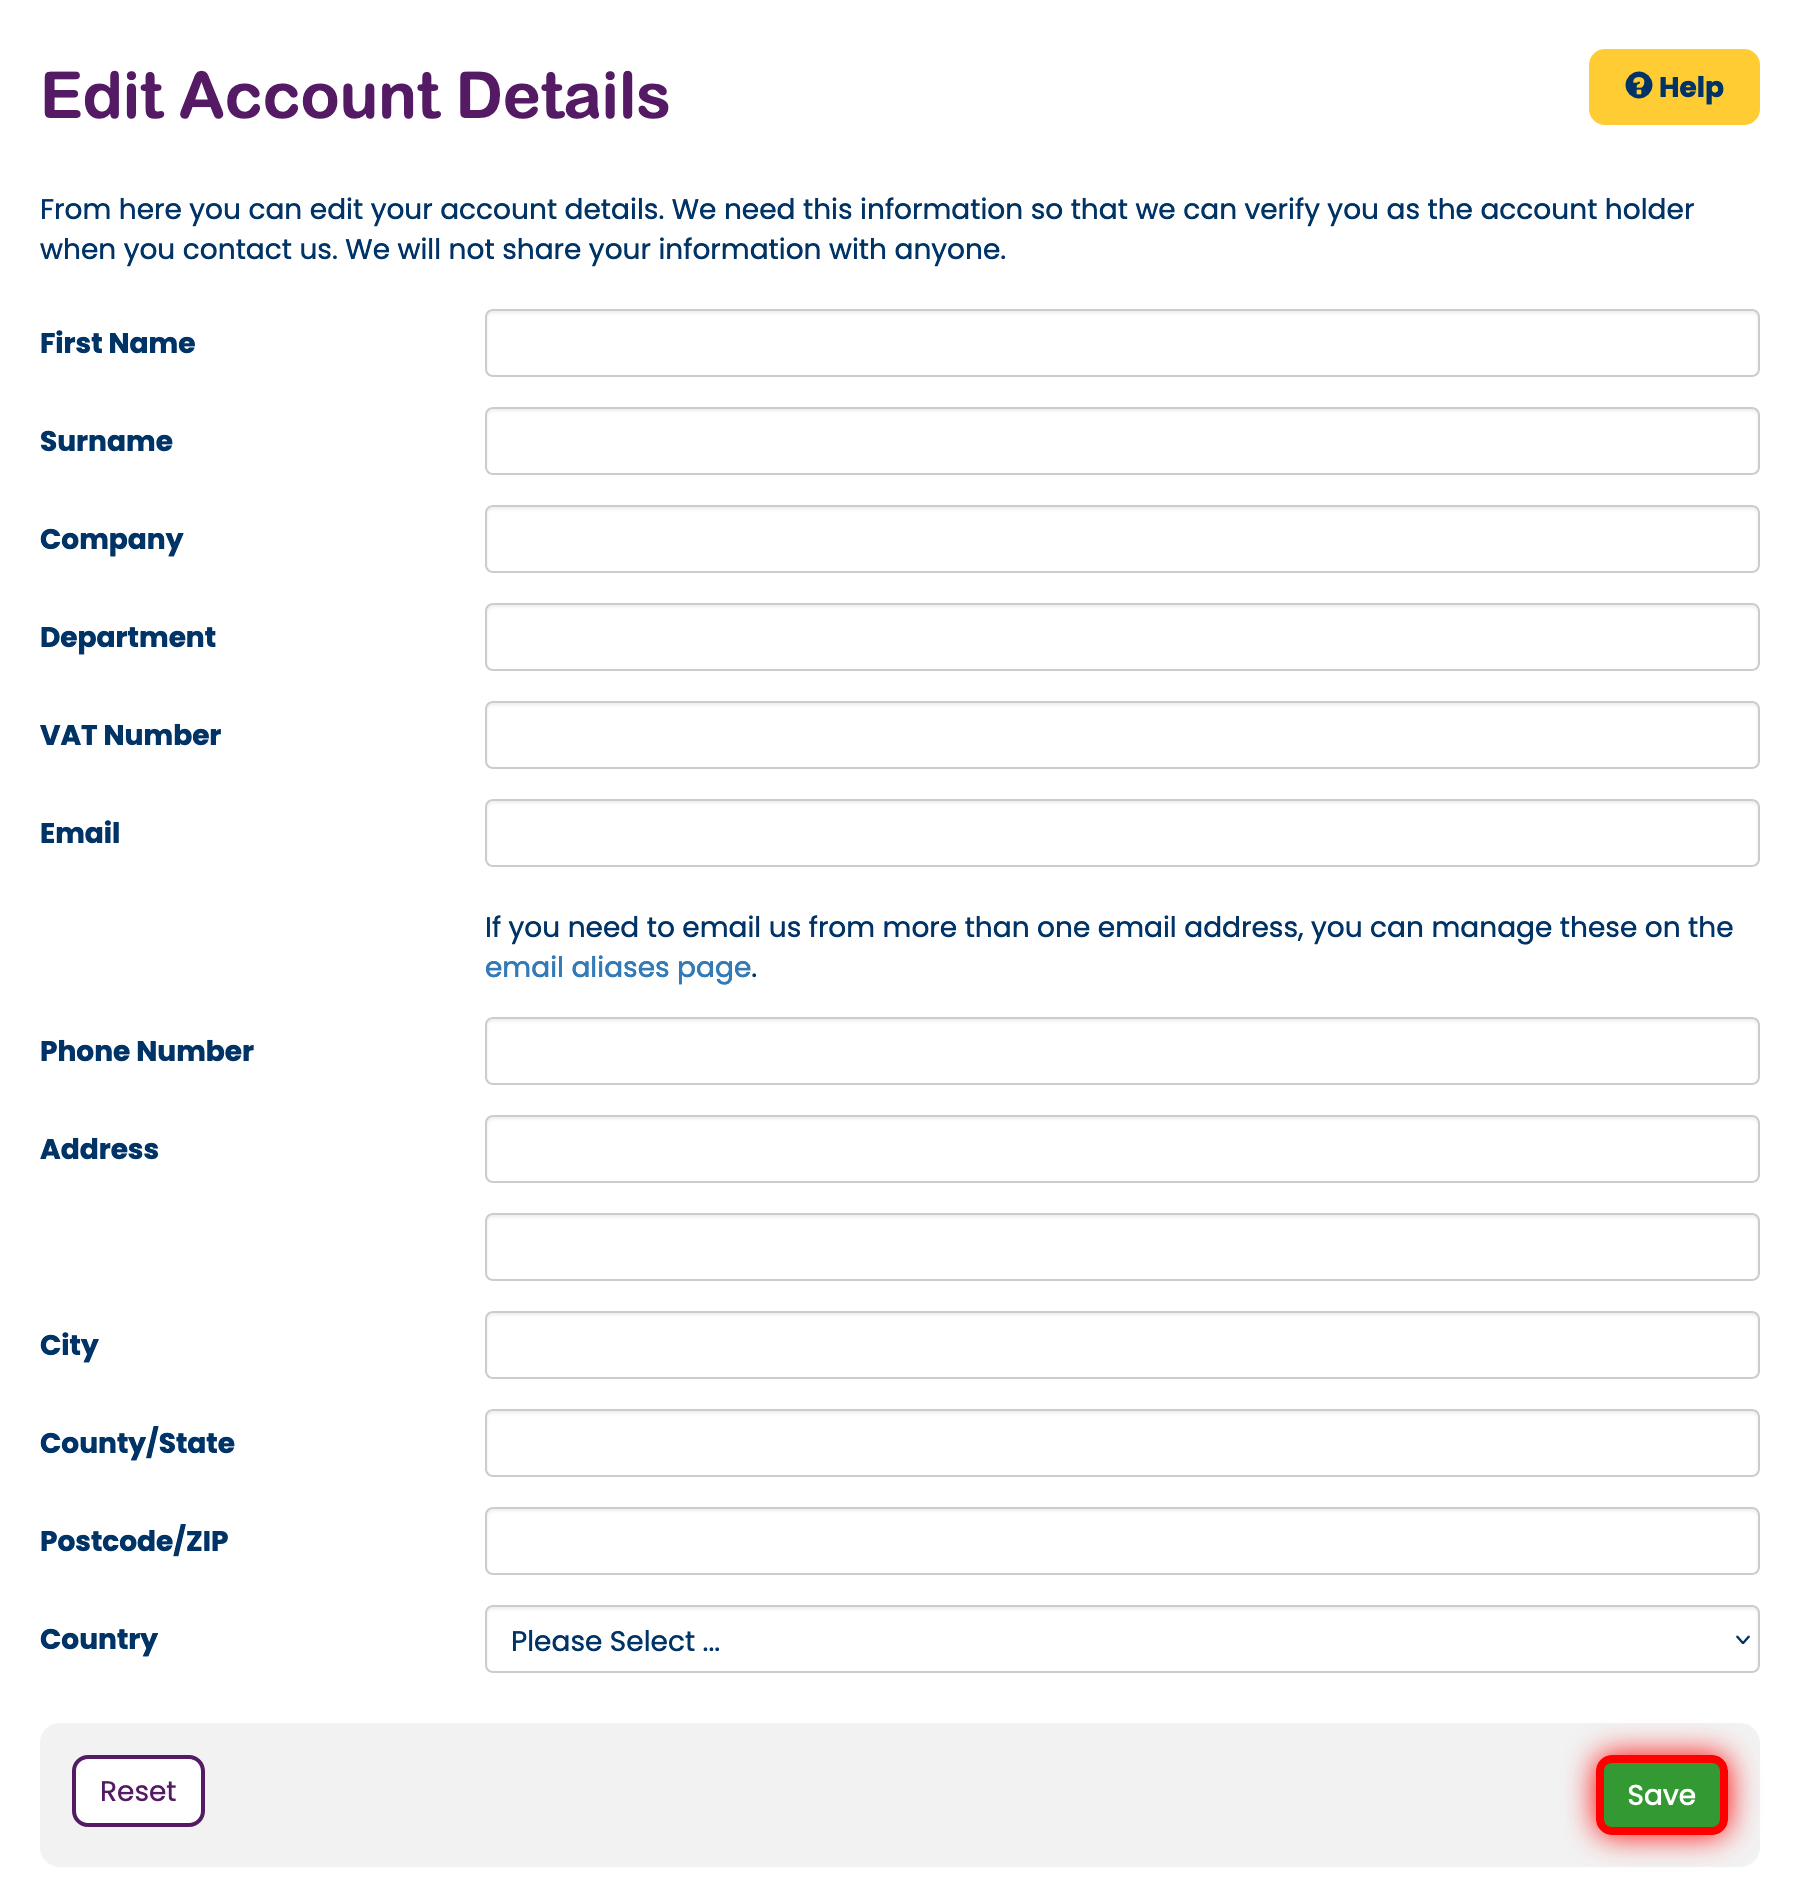 Edit your account details